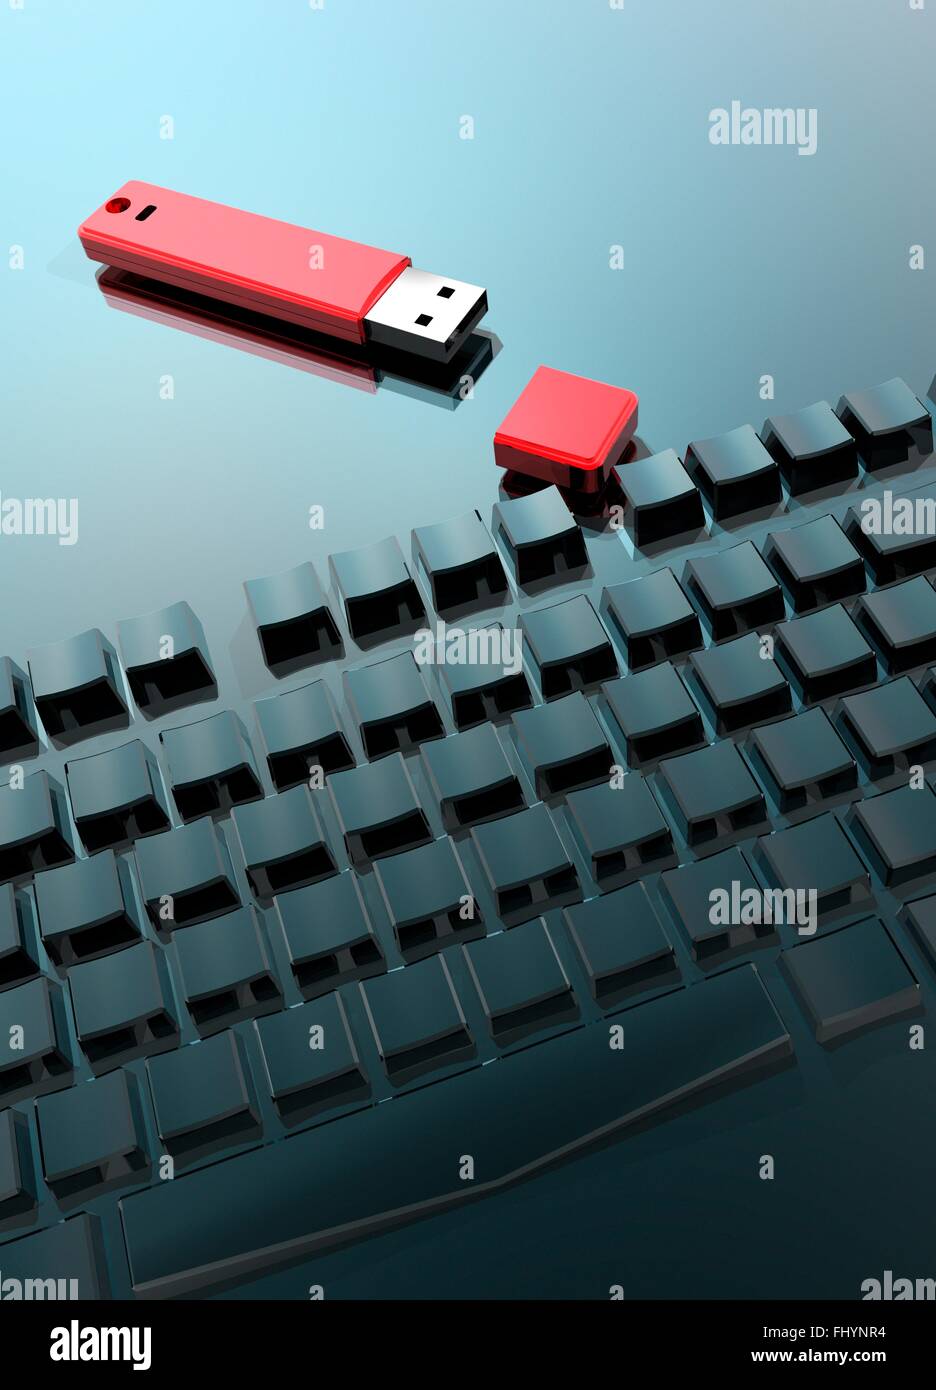 USB (universal serial bus) data stick and computer keys, illustration. Stock Photo